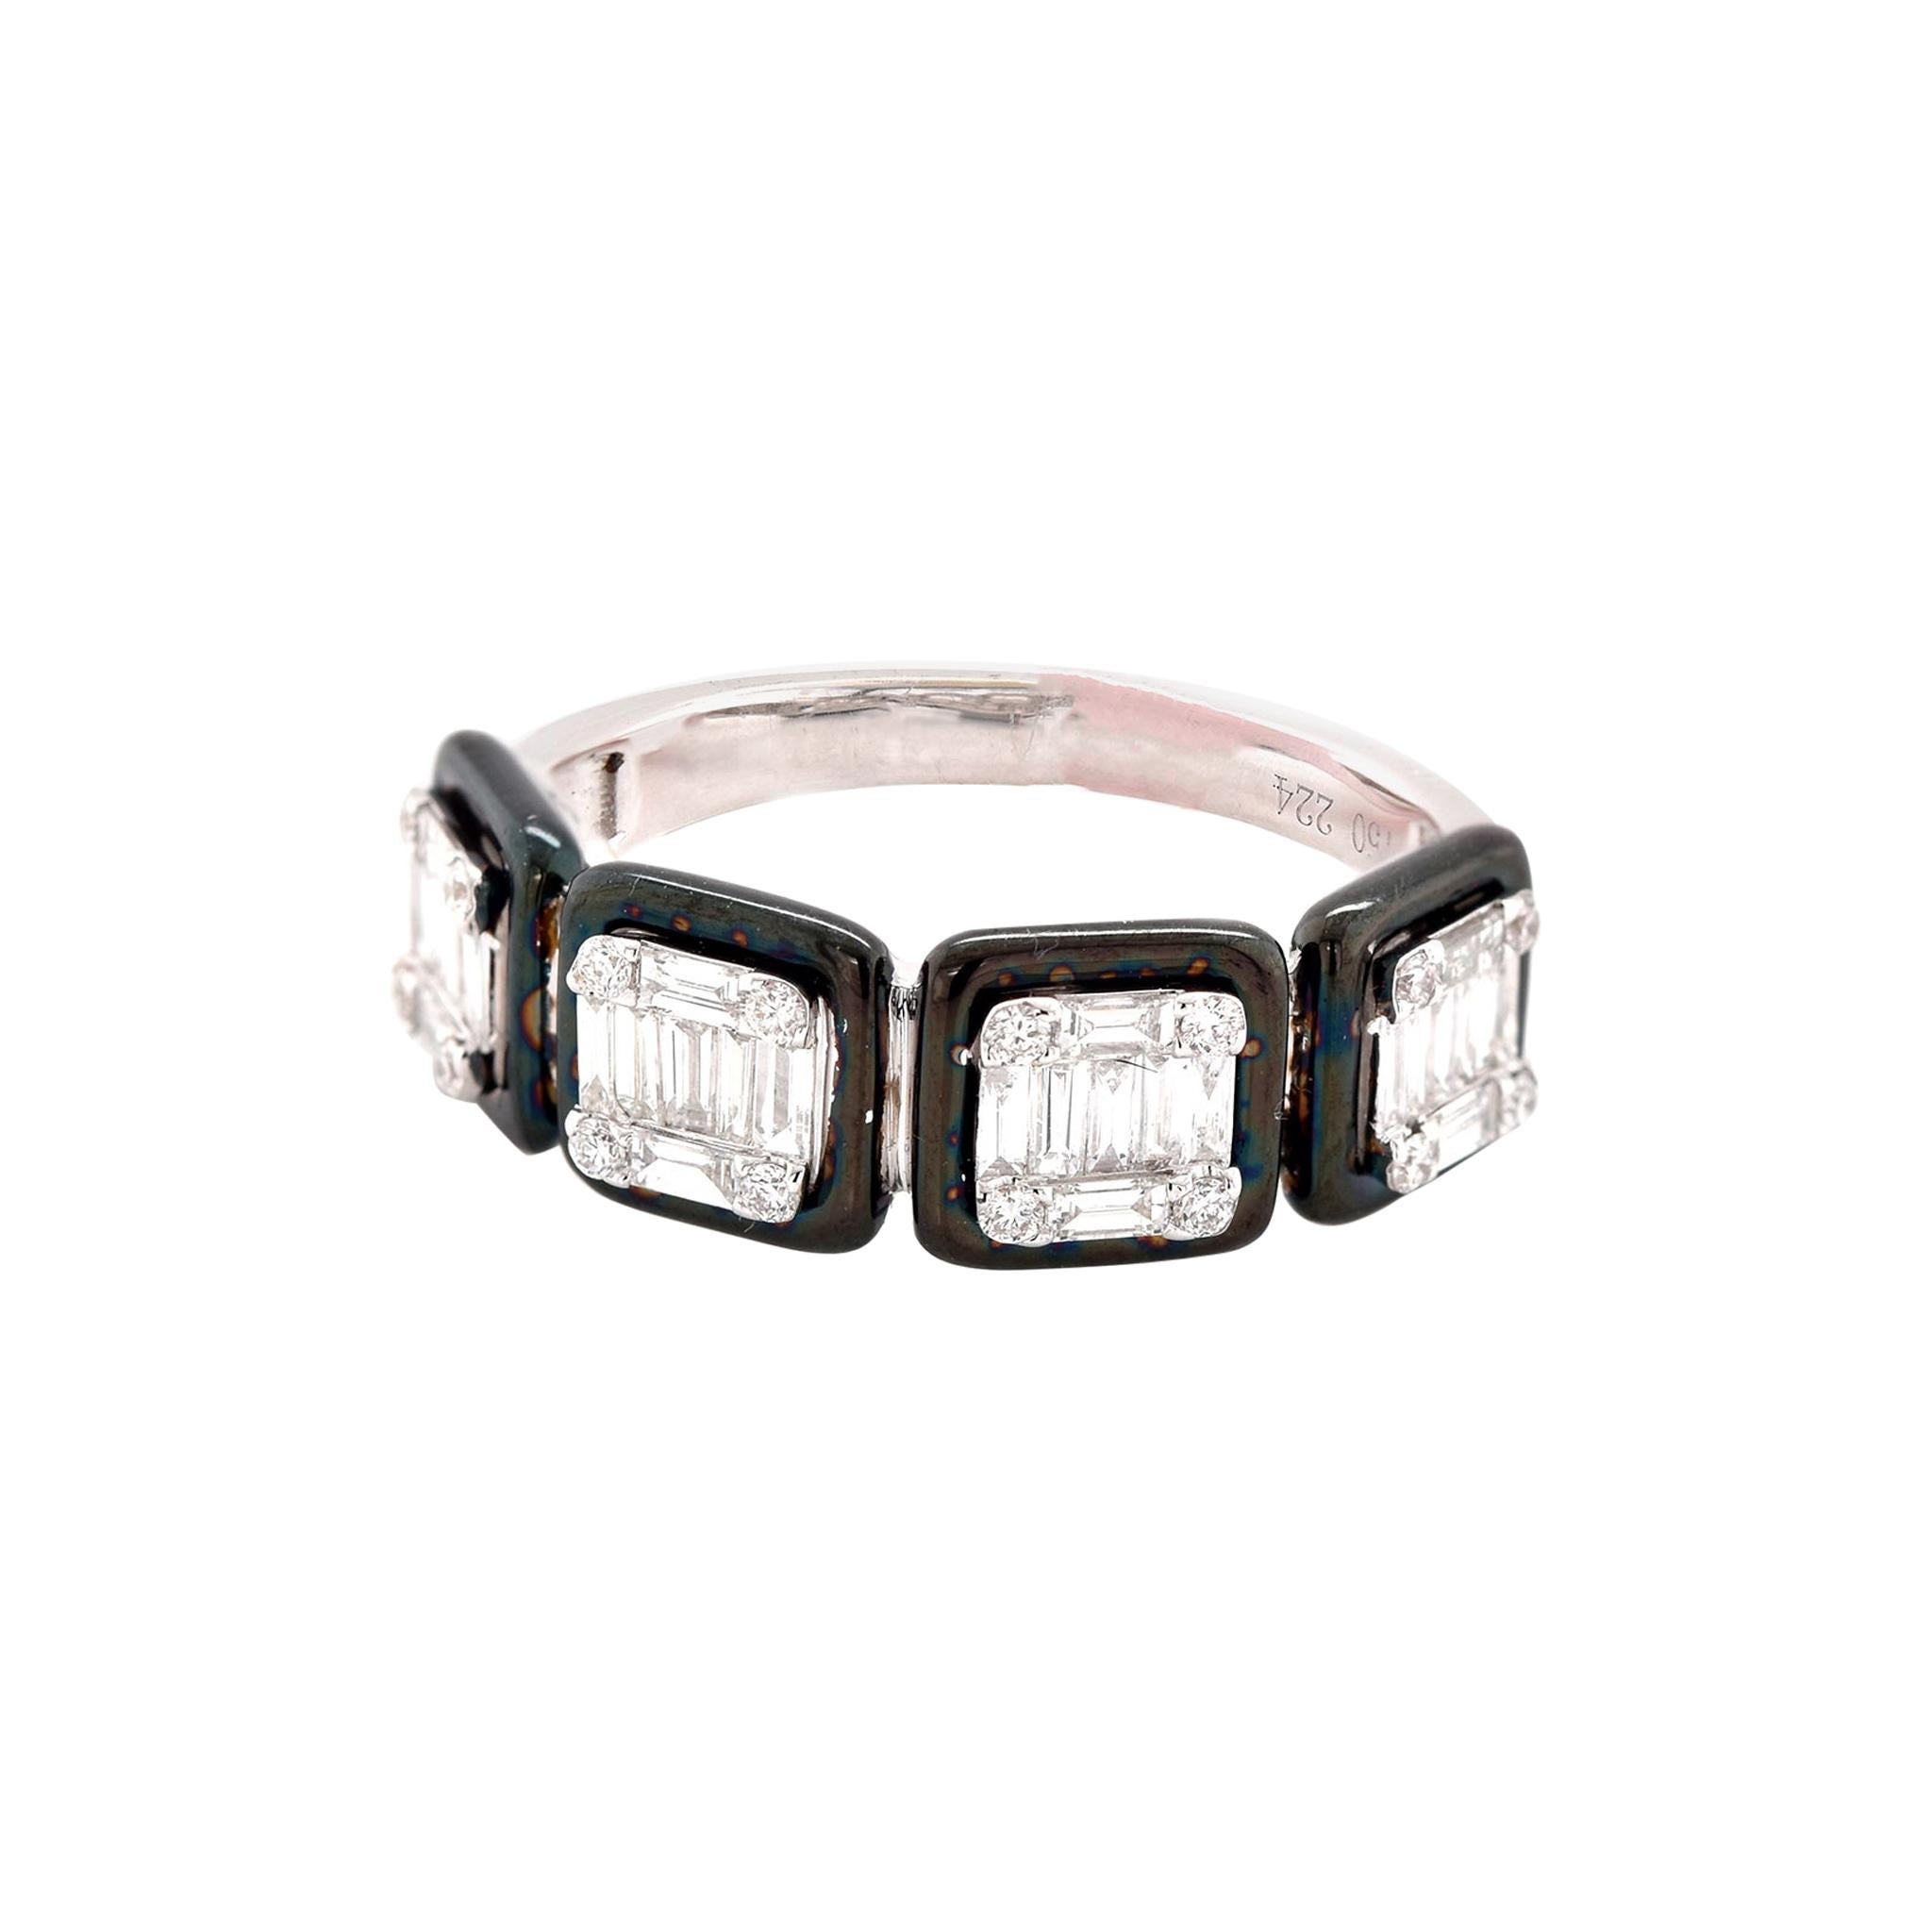 18 Karat White Gold Mosaic Set Diamond Ring with Black Onyx